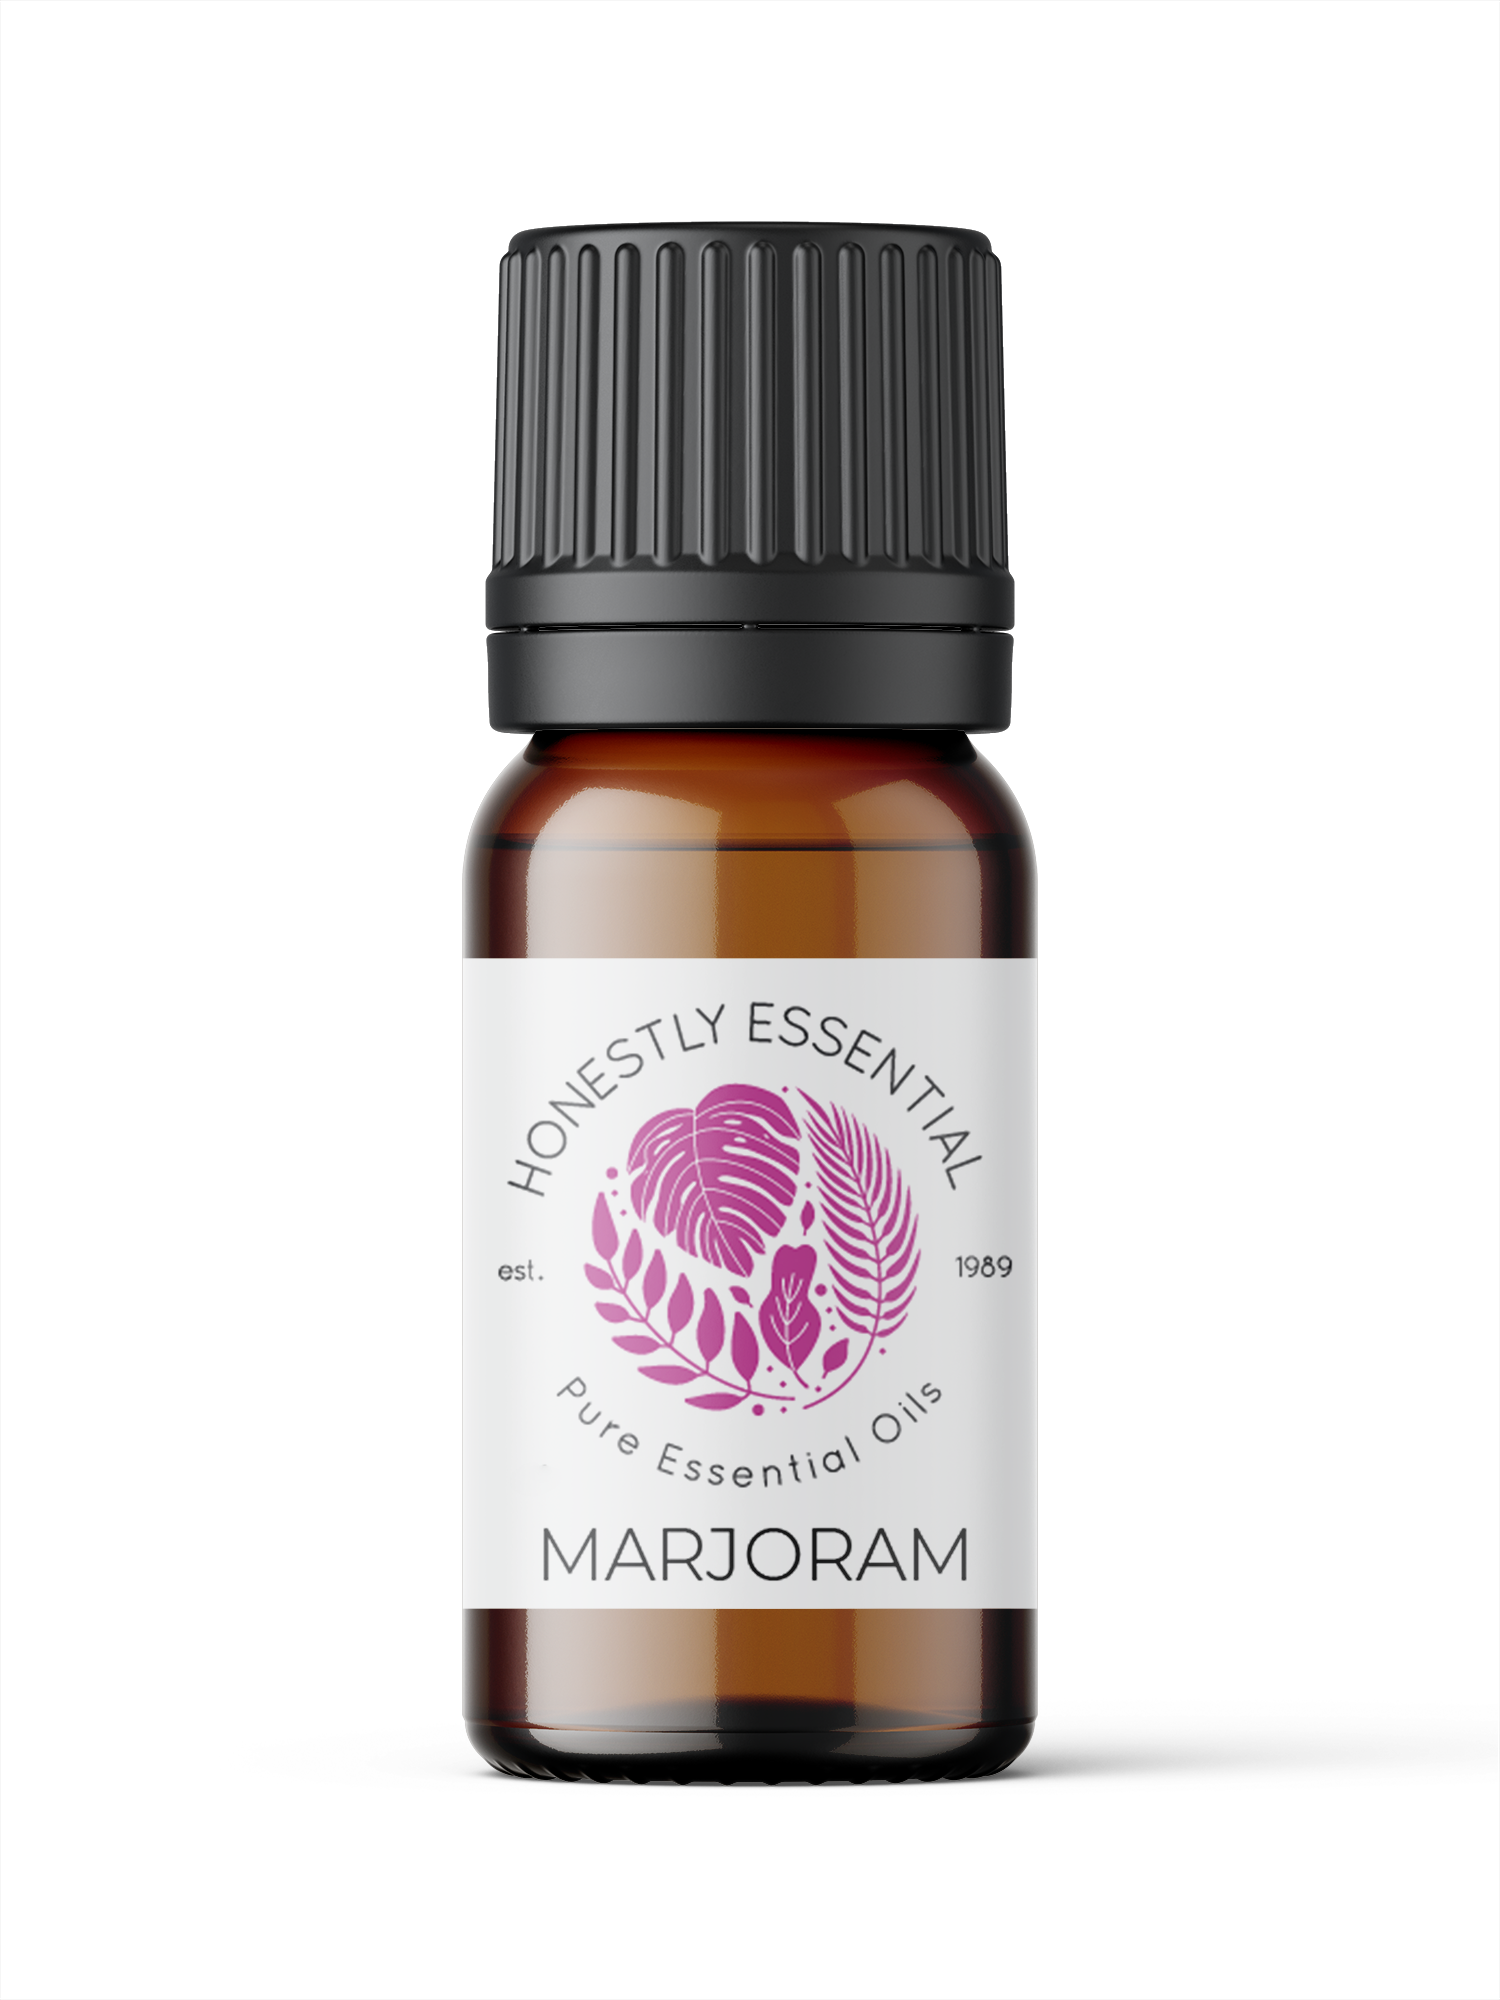 Marjoram Essential Oil - Essential Oils | Honestly Essential Oils anxiety, depression, herb, herb essential oil, herbs, relaxation, relaxation and sleep, sleep